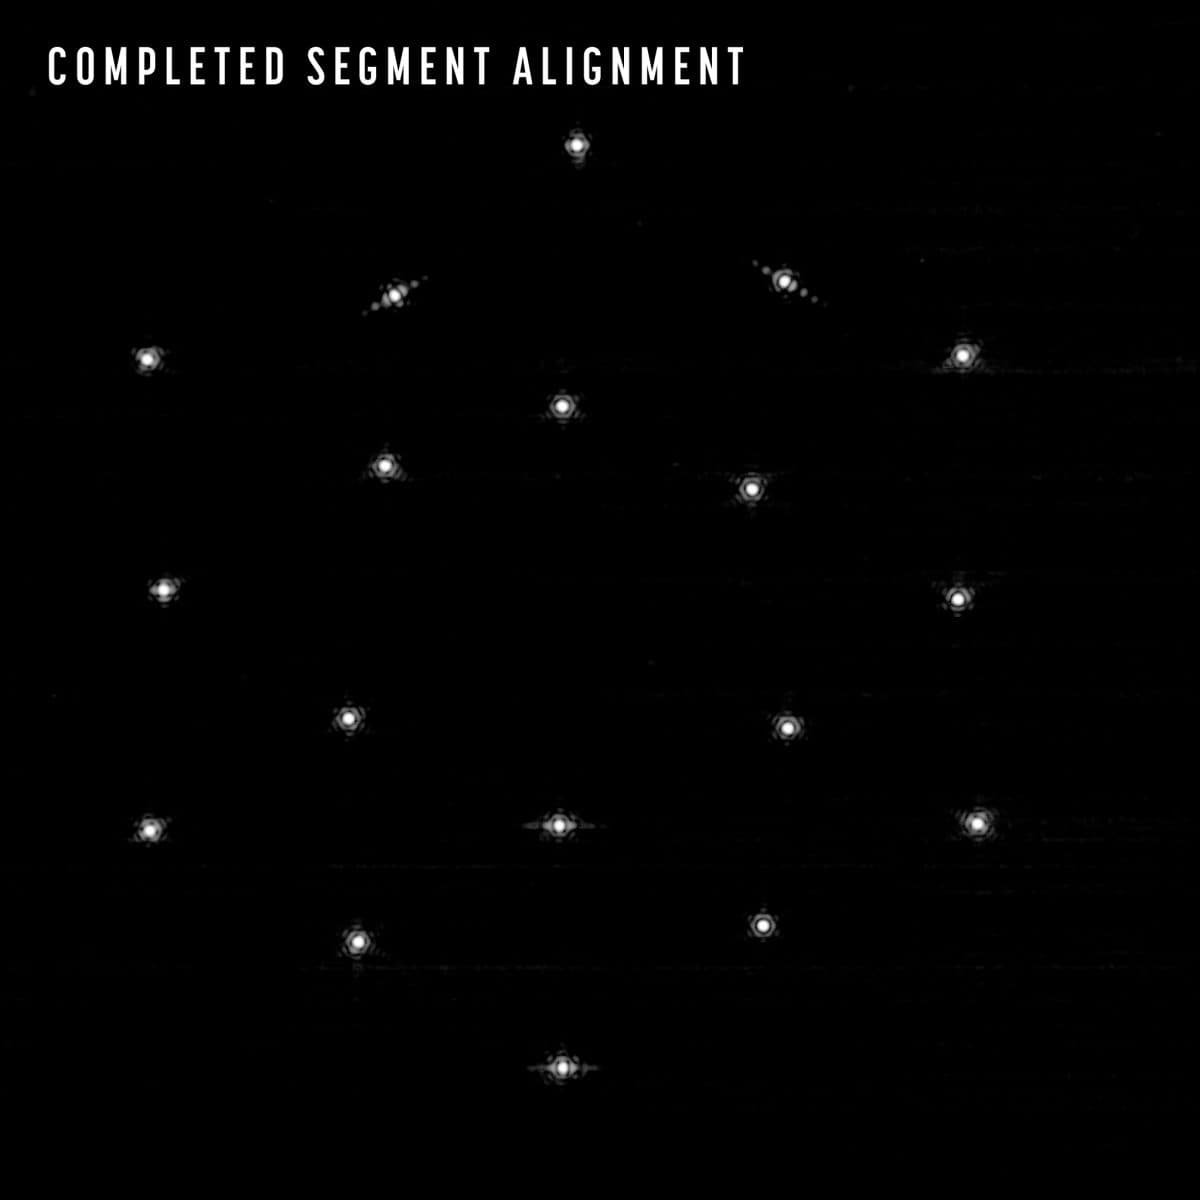 alignment_01